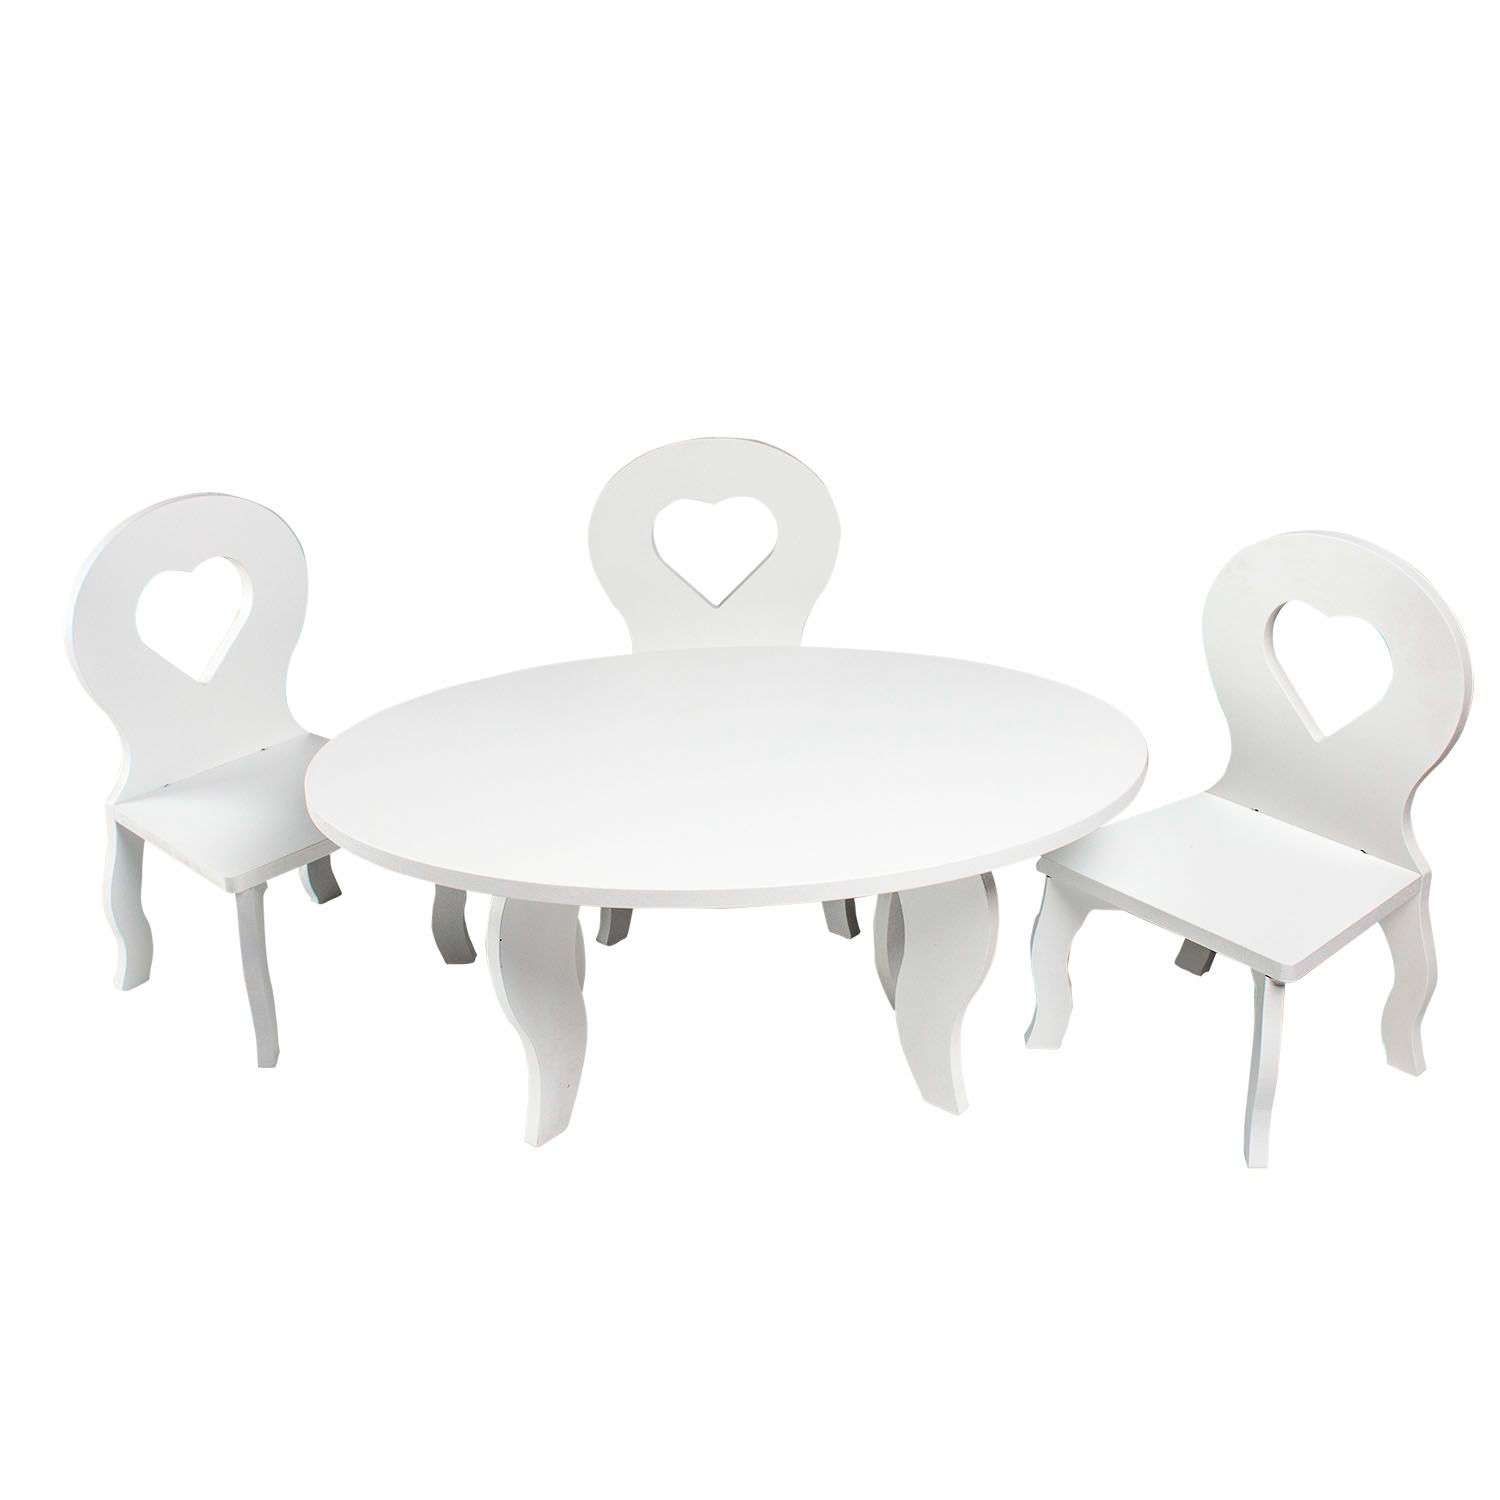 Мебель для кукол Paremo Шик мини 4предмета Белый PFD120-47M PFD120-47M - фото 1